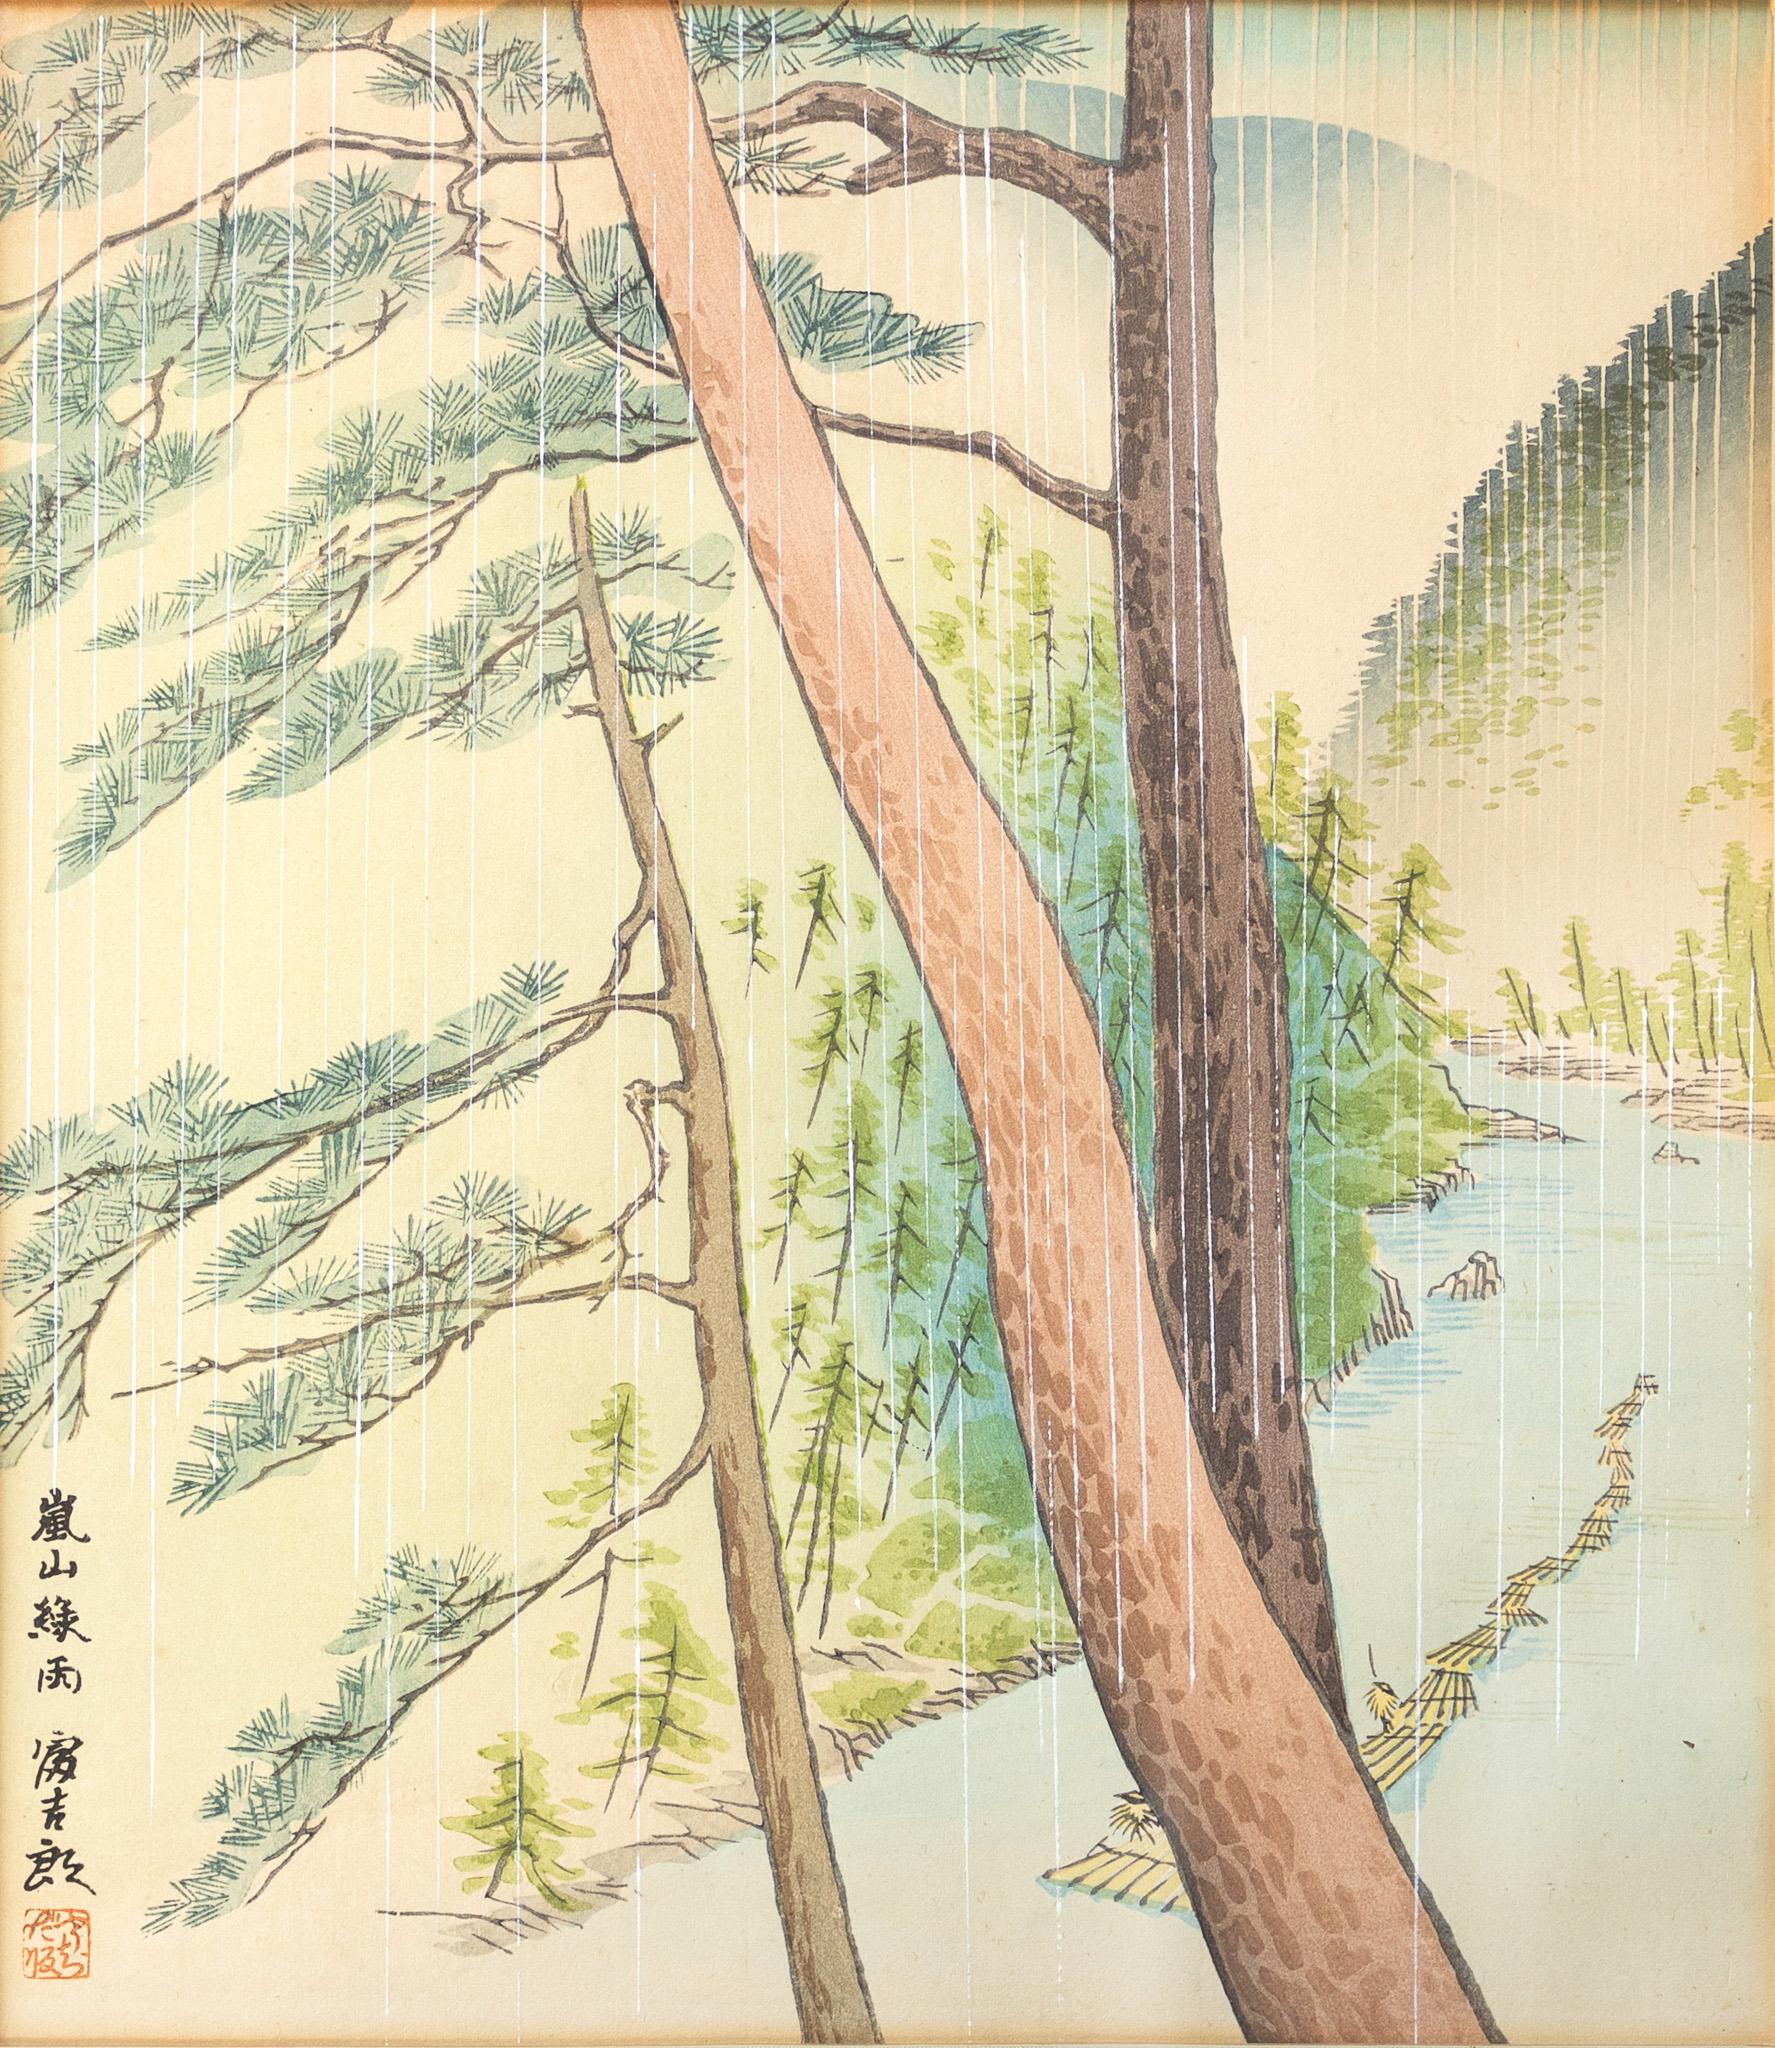 Tokuriki Tomikichiro Landscape Print - River Scene - Japanese Woodblock Print